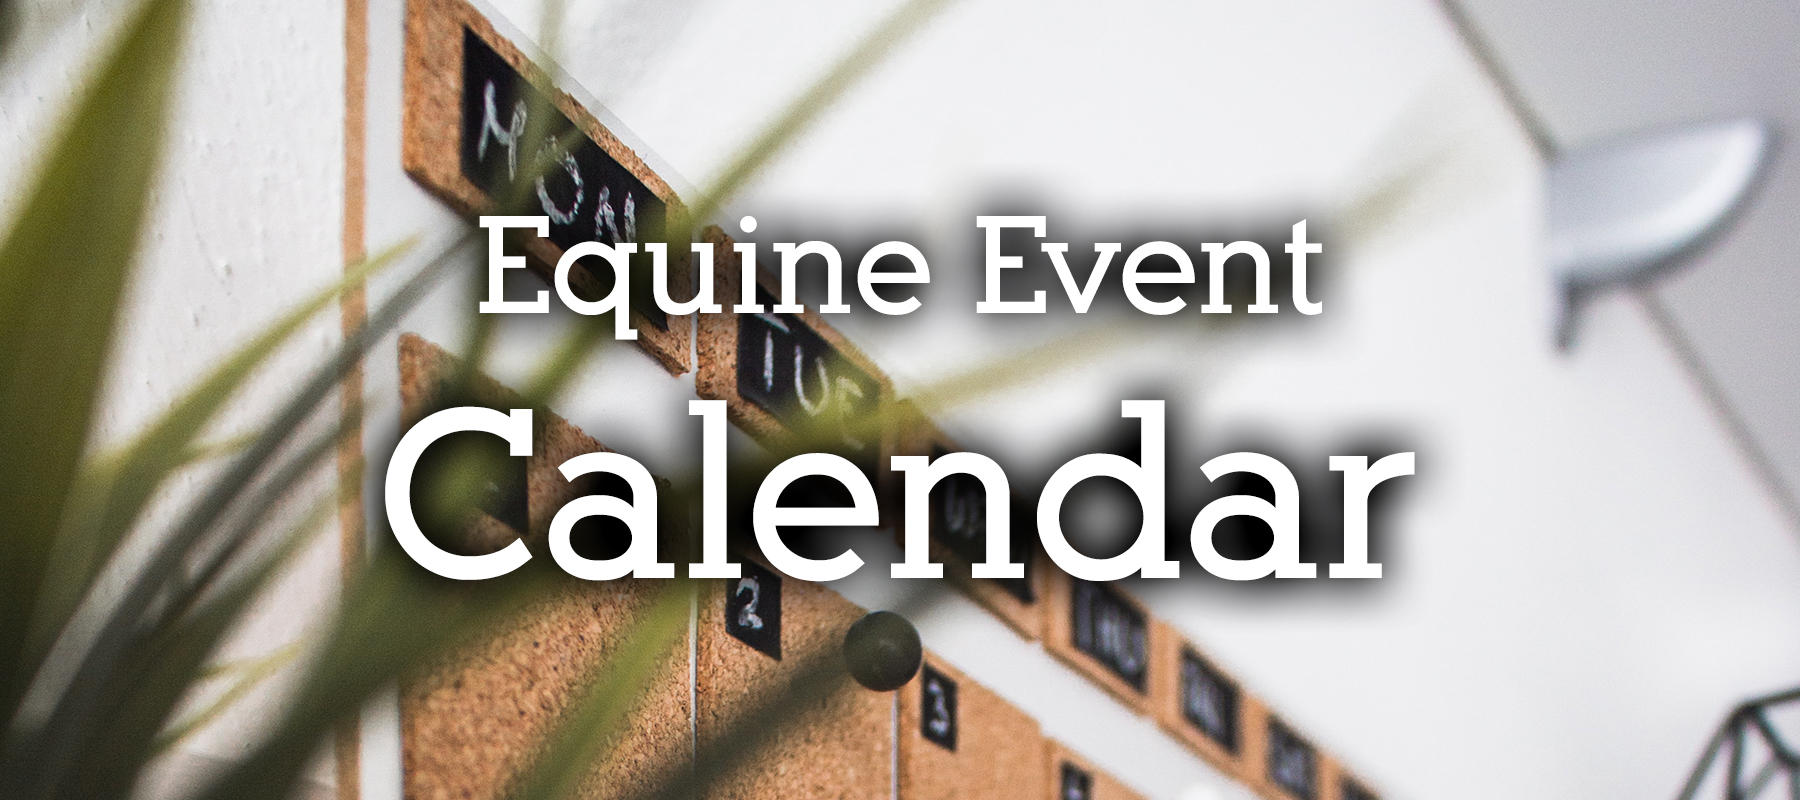 Equine Event Calendar in Colorado